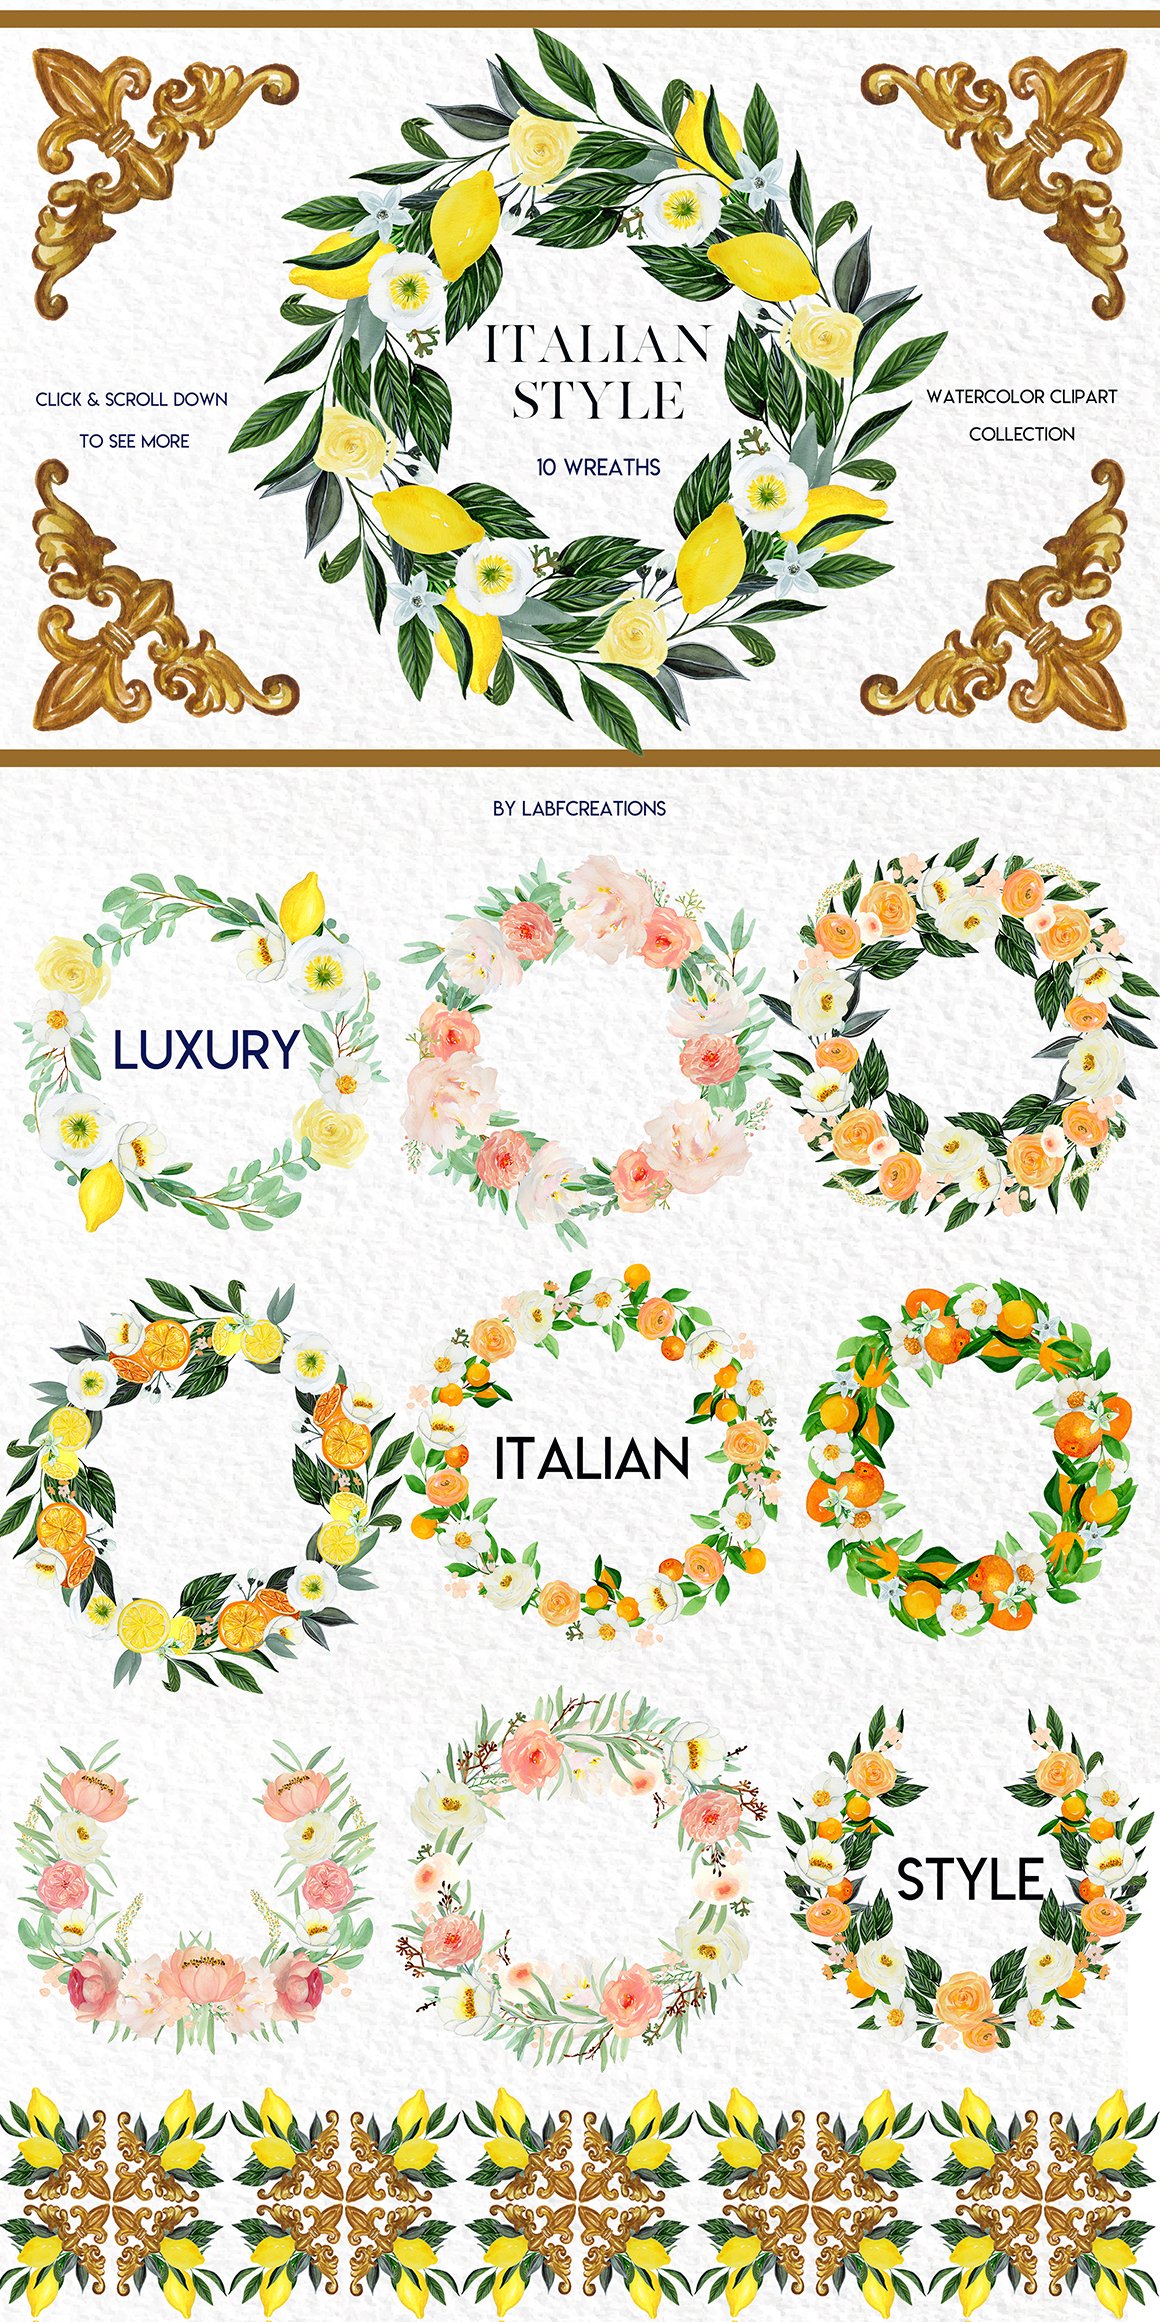 Italian Style Watercolor Tiles